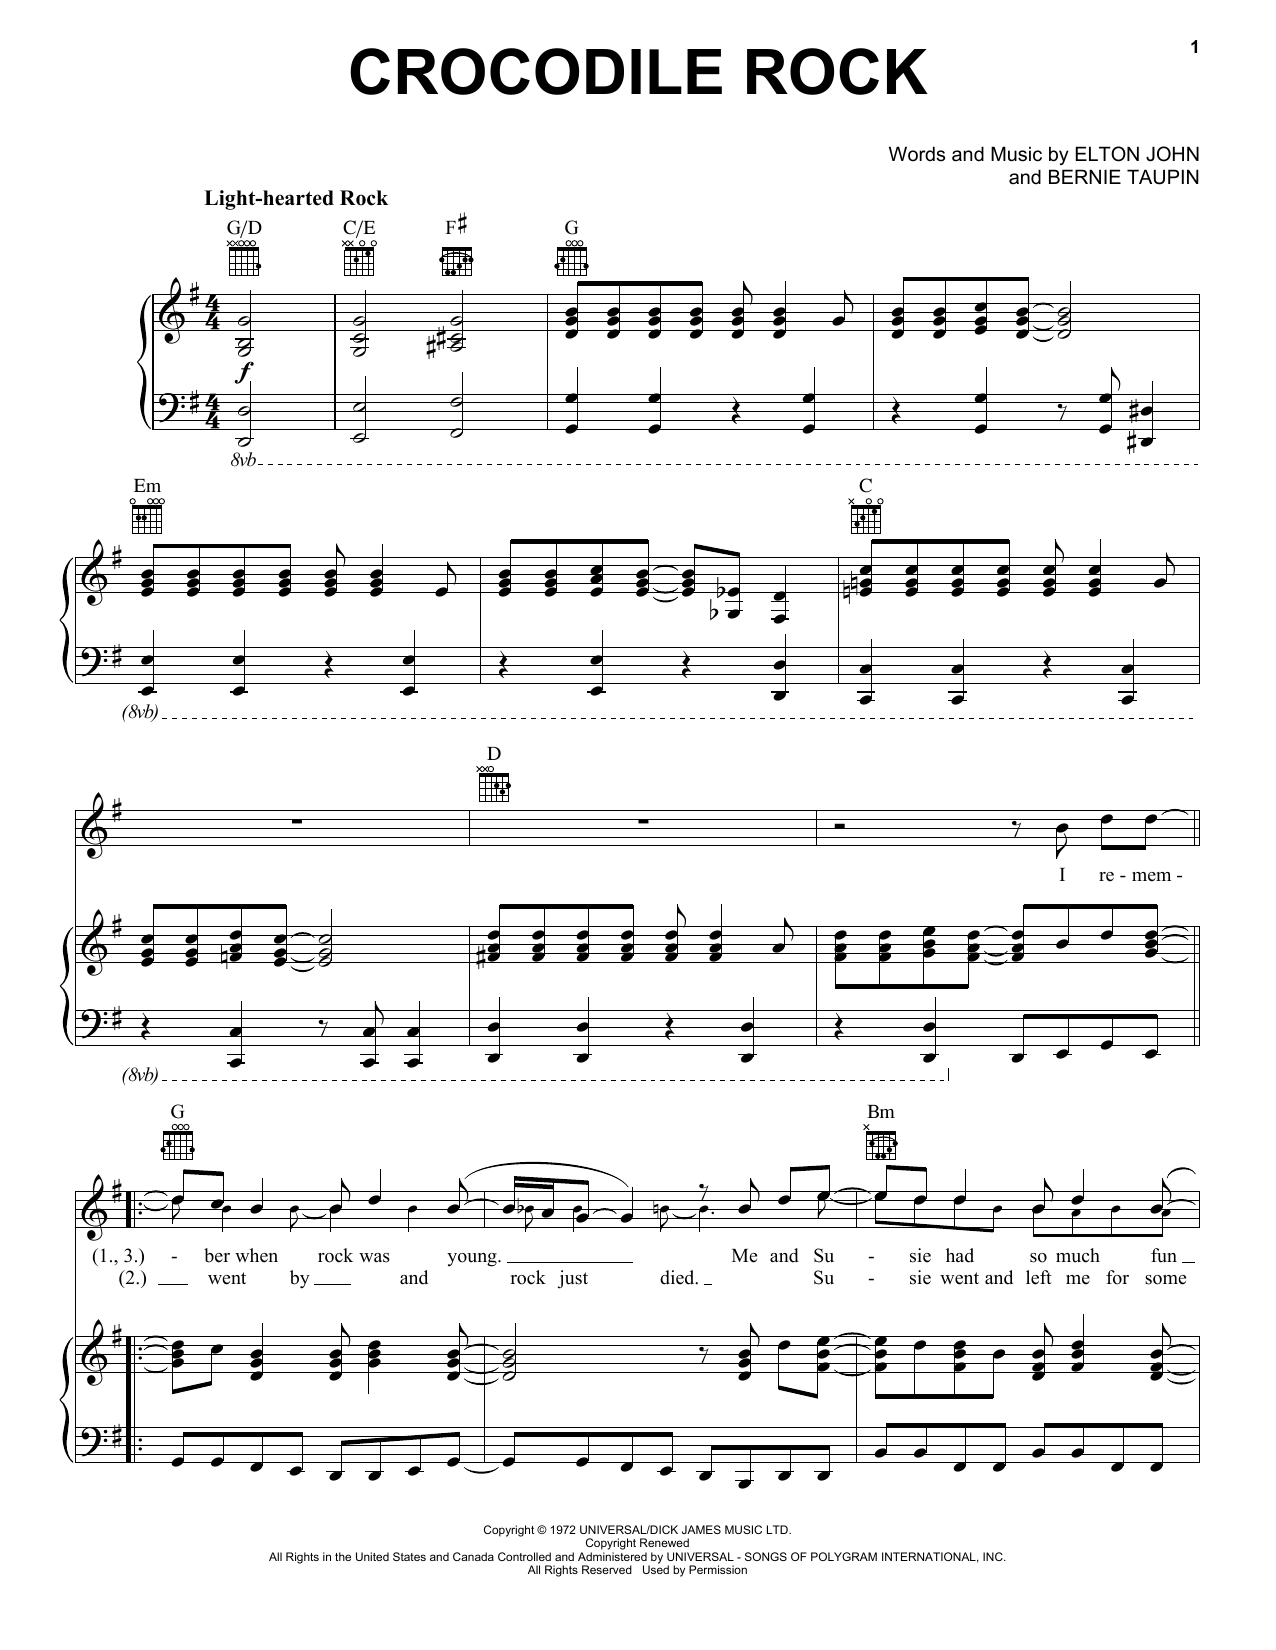 Download Elton John Crocodile Rock Sheet Music and learn how to play Trombone PDF digital score in minutes